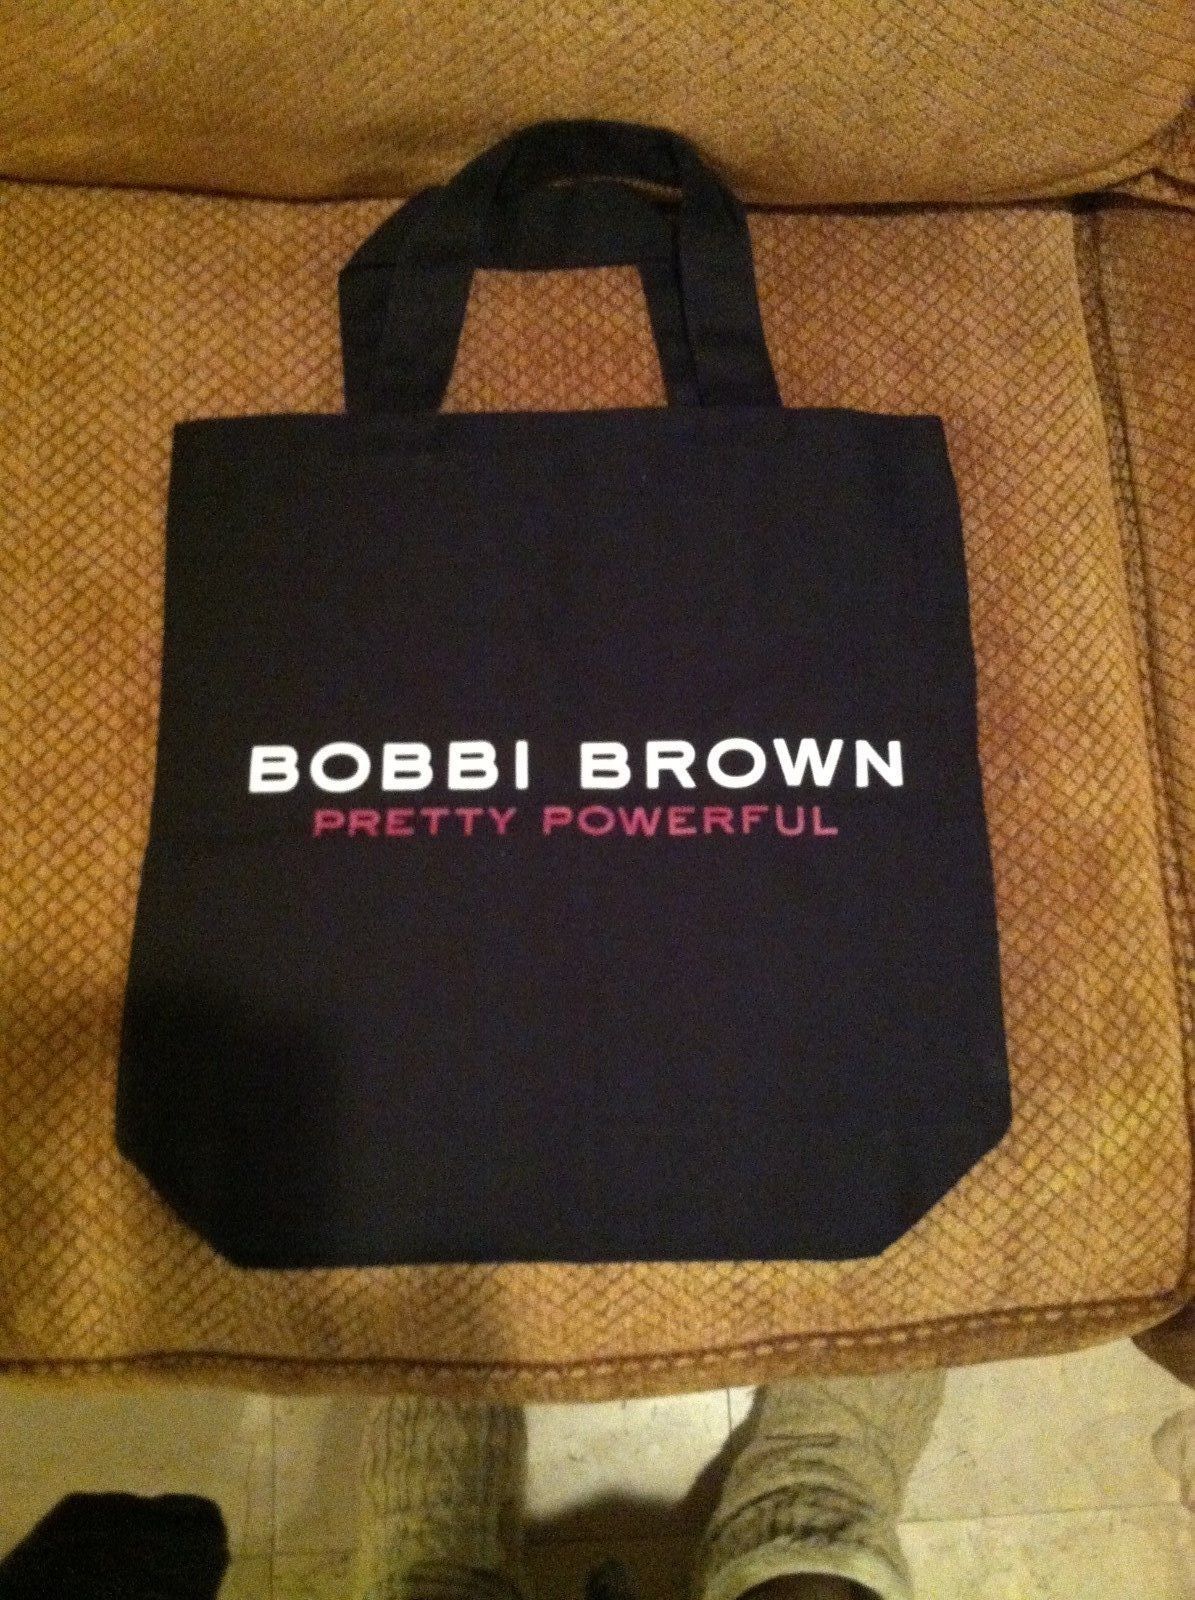 Bobbi Brown Pretty Powerful Tote Bag Brand and 50 similar items